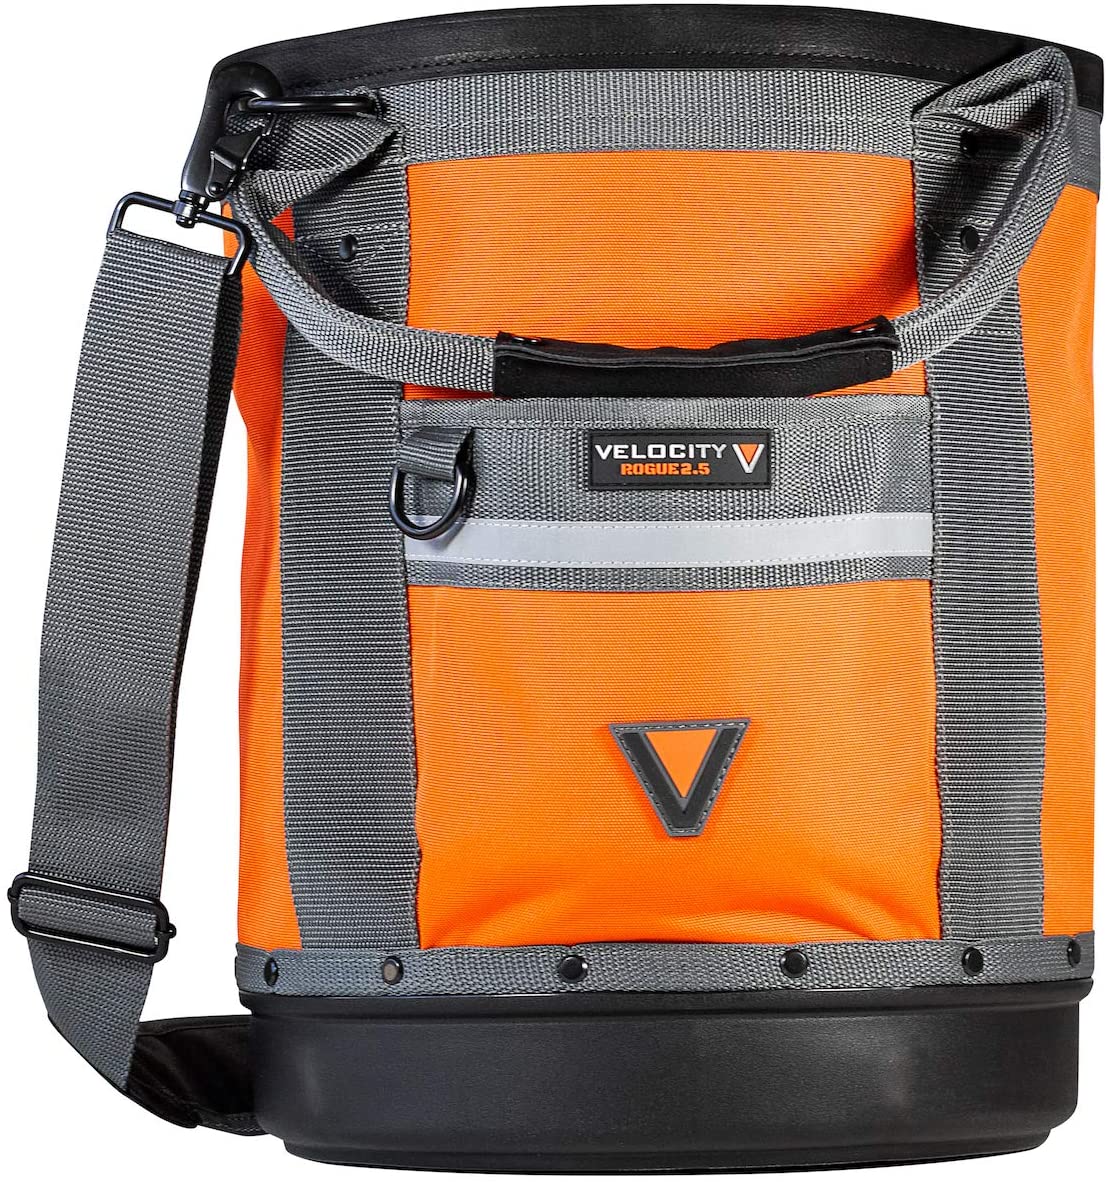 Velocity Rogue 2.5 Bucket Bag - VR-2809